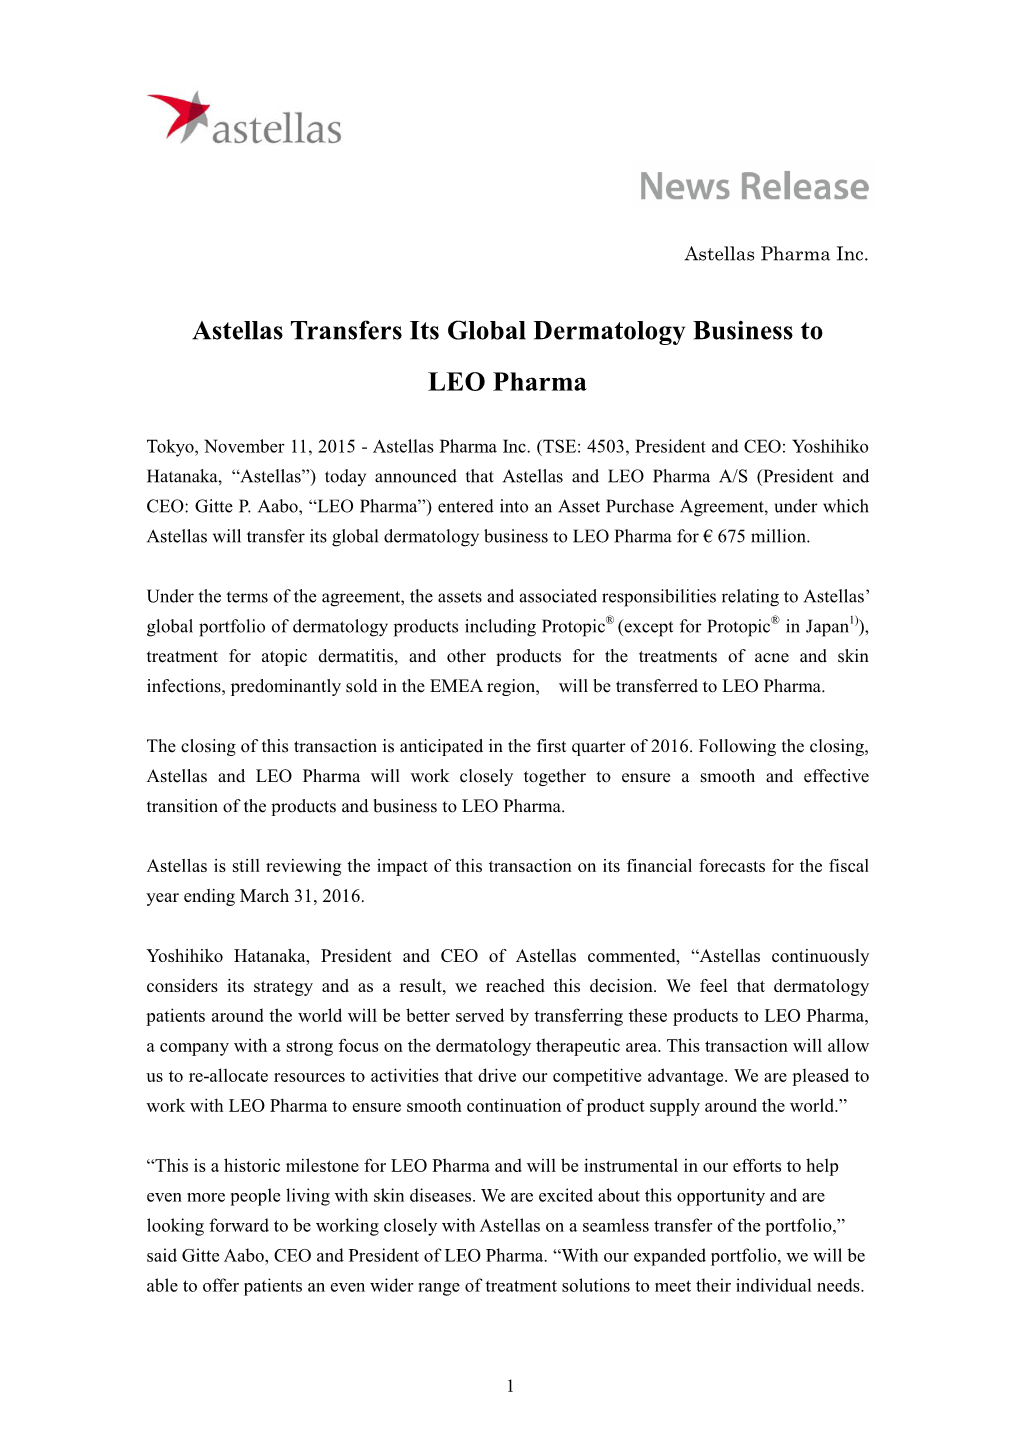 Astellas Transfers Its Global Dermatology Business to LEO Pharma